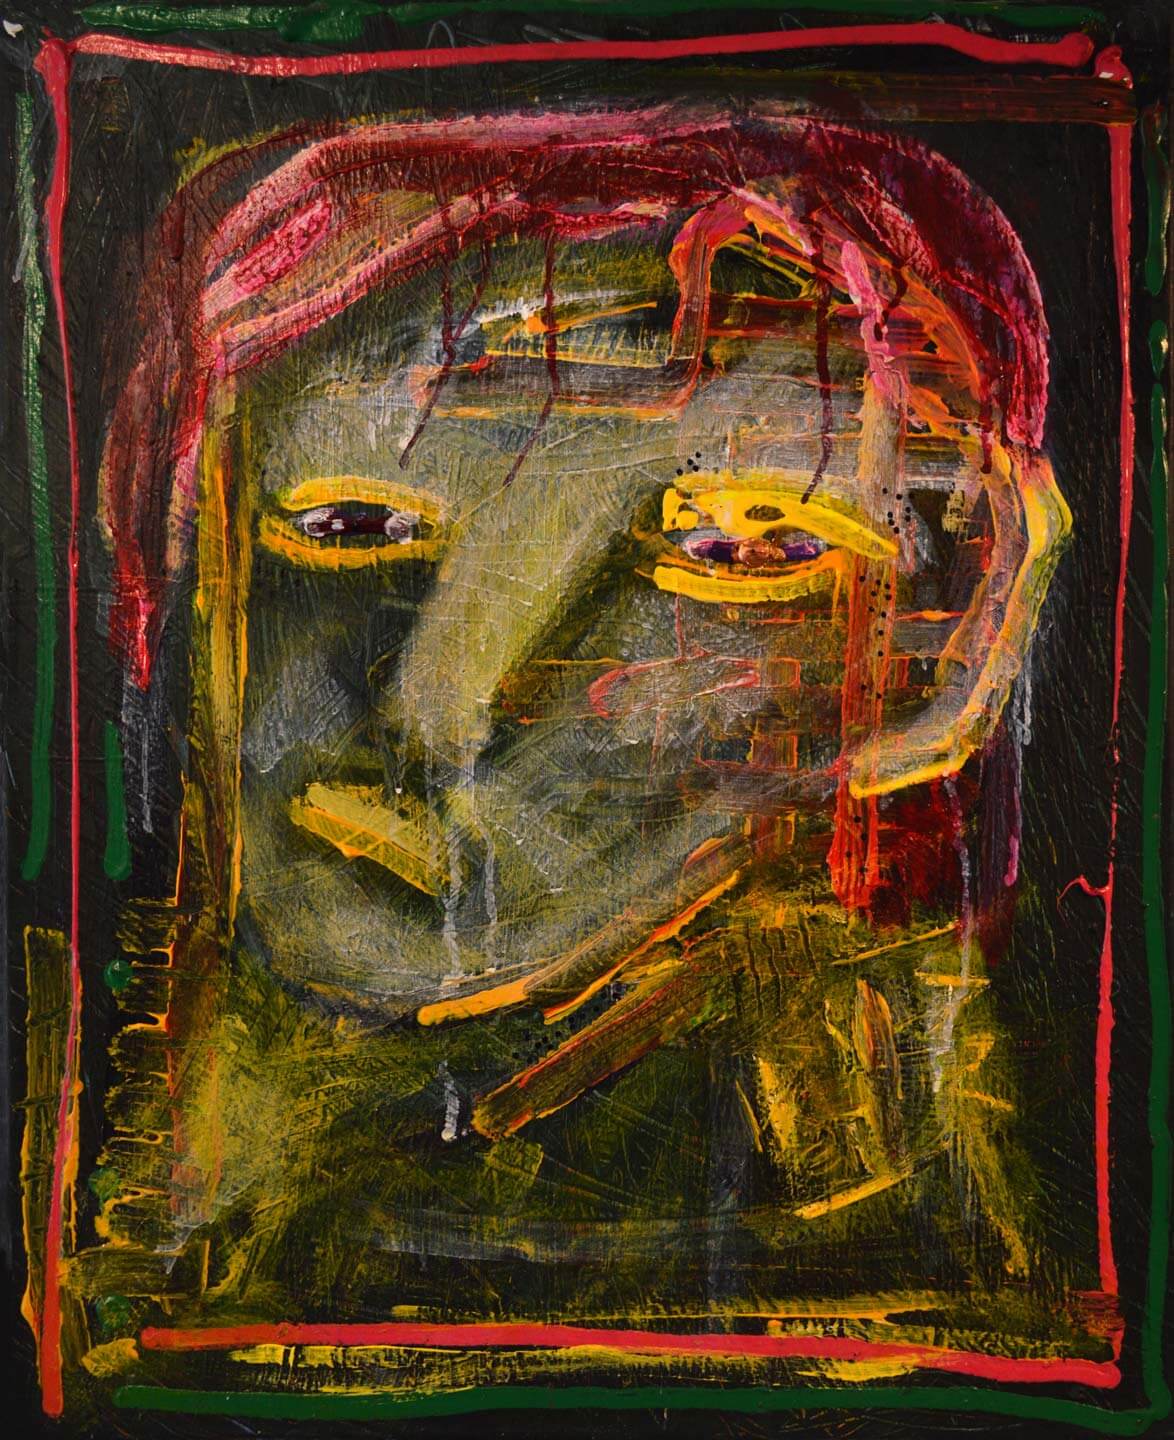 Juan Mariño, Venezuela. Under the green rain, 2012. Acrylic on canvas, 19” x 23”